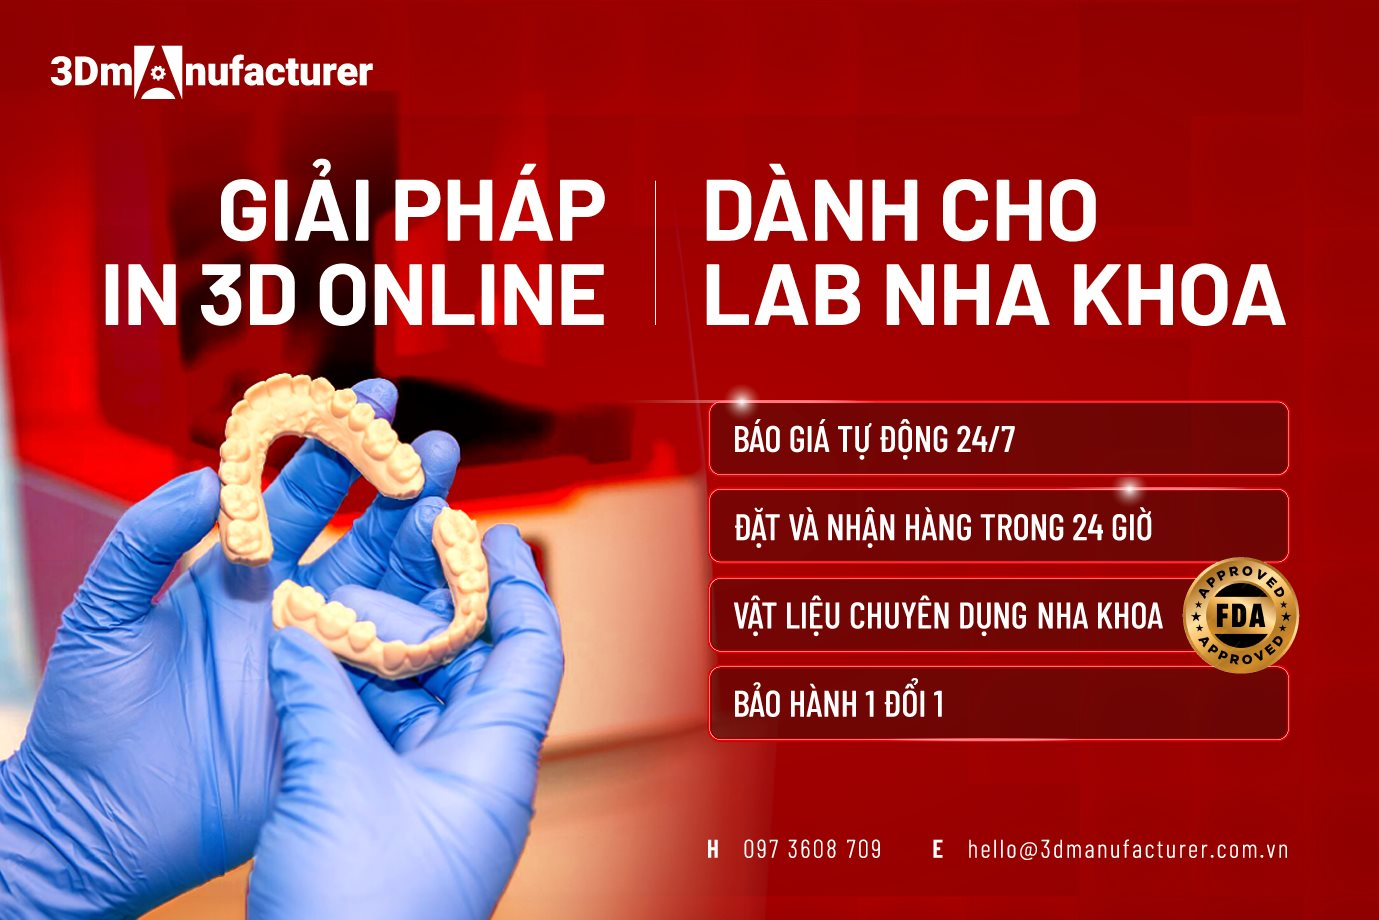 3dmanufacturer-giai-phap-in-3d-online-danh-cho-lab-nha-khoa.png